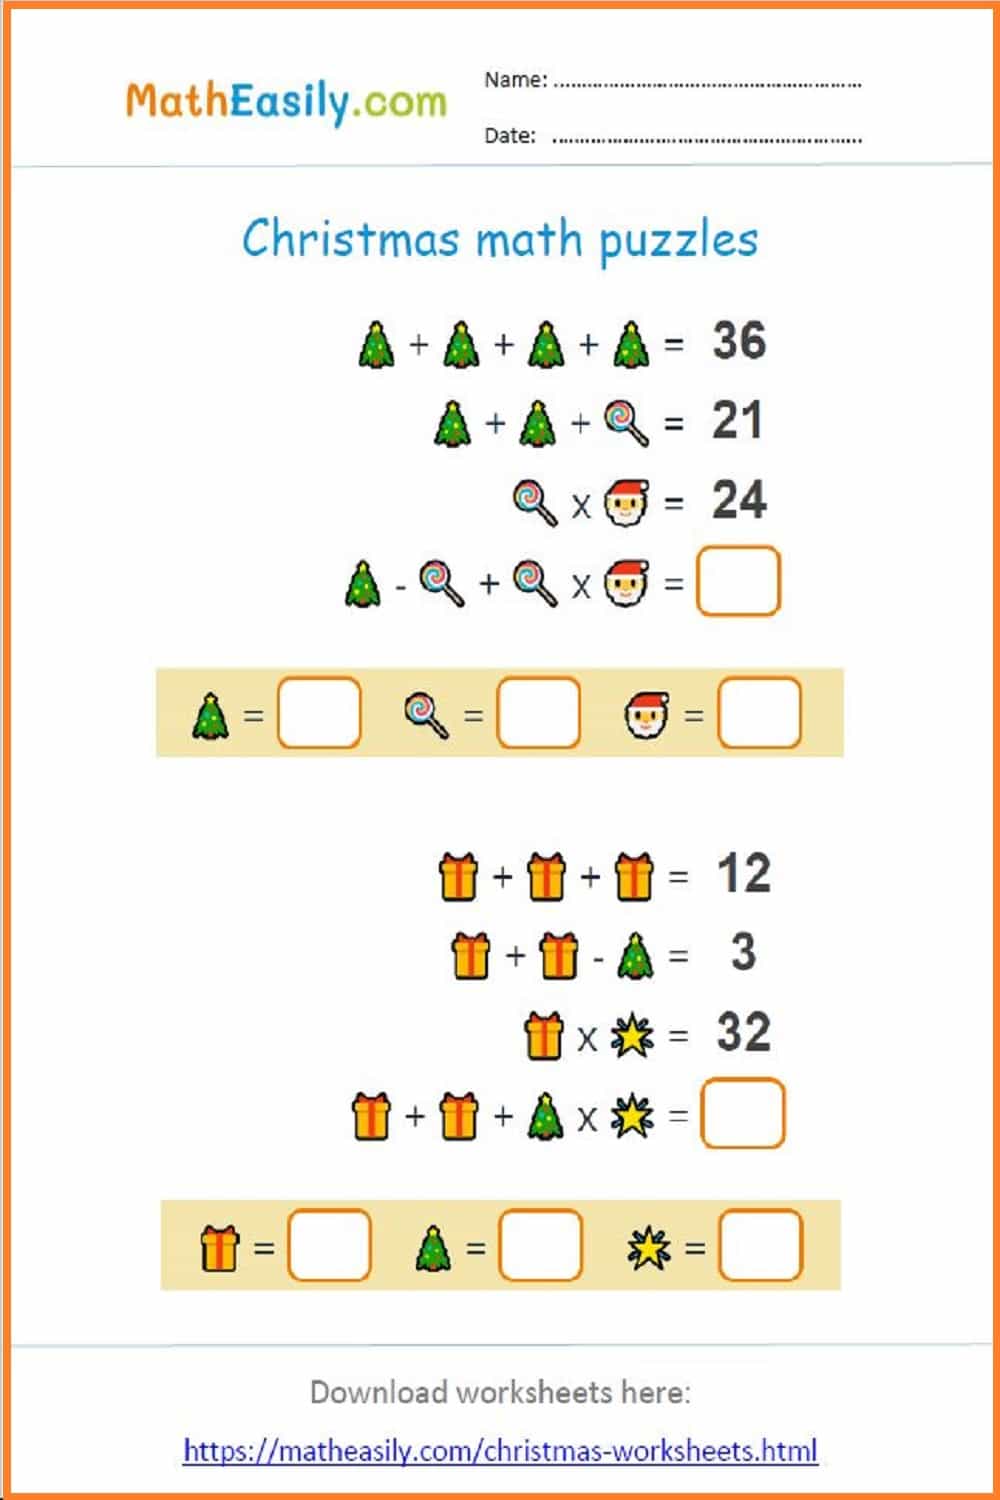 Christmas math puzzle games. Free Christmas math games printable. 
Math Christmas games. Christmas math activities. Math games for Christmas. Free online Christmas games for kids online.